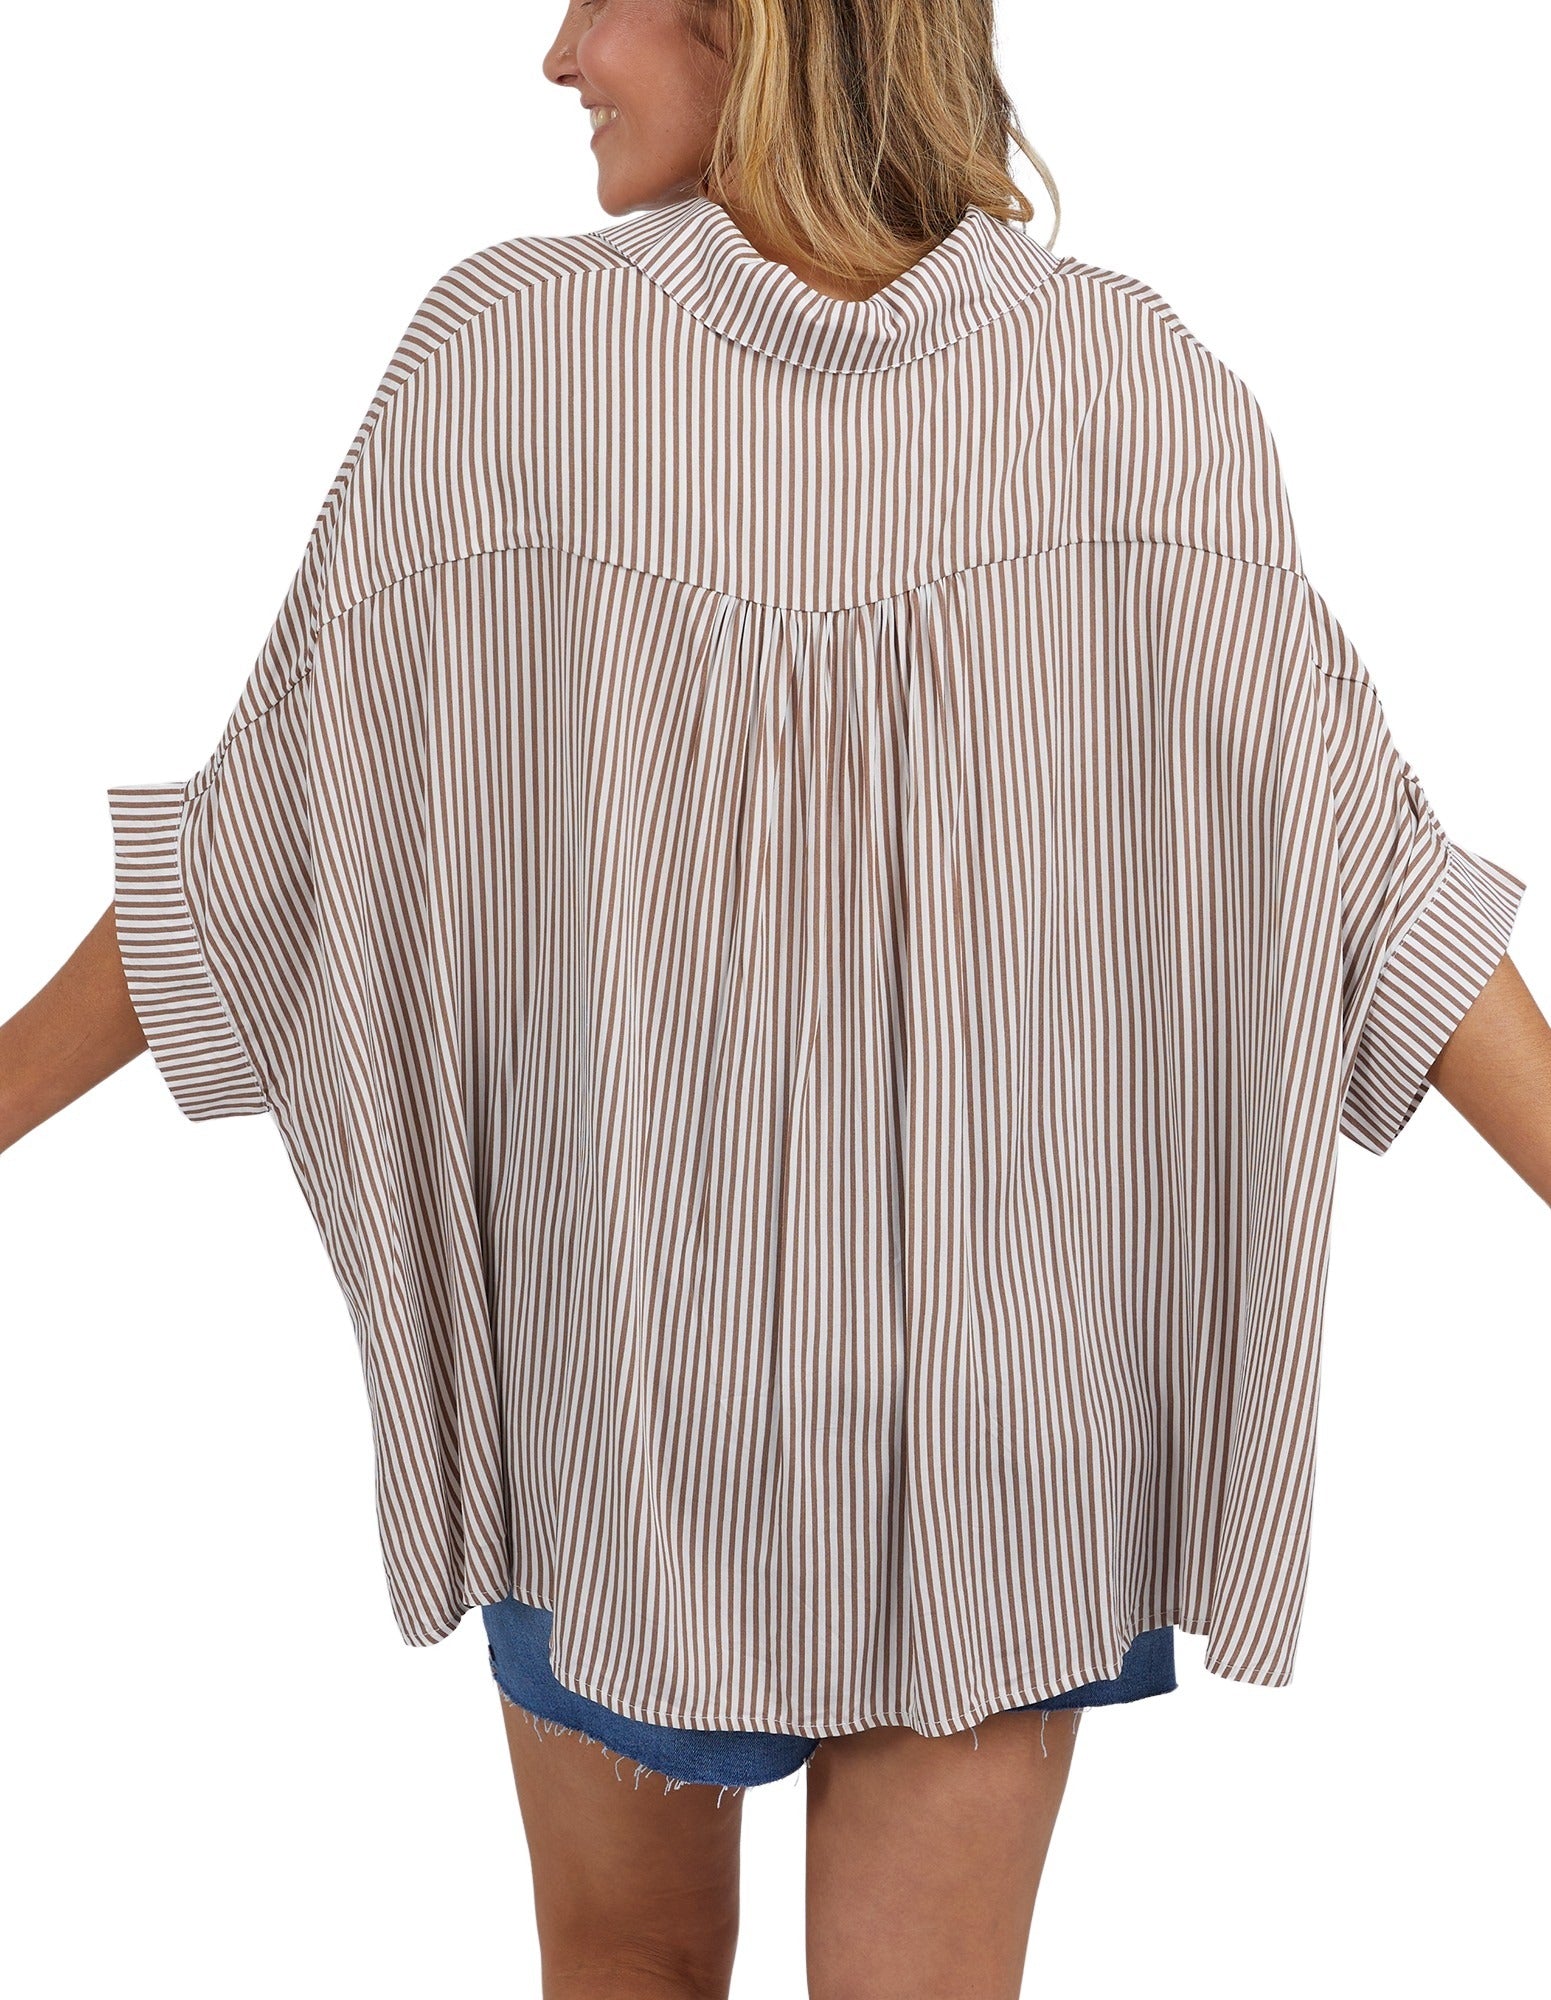 Elm - Luna Shirt - Mocha & White Stripe